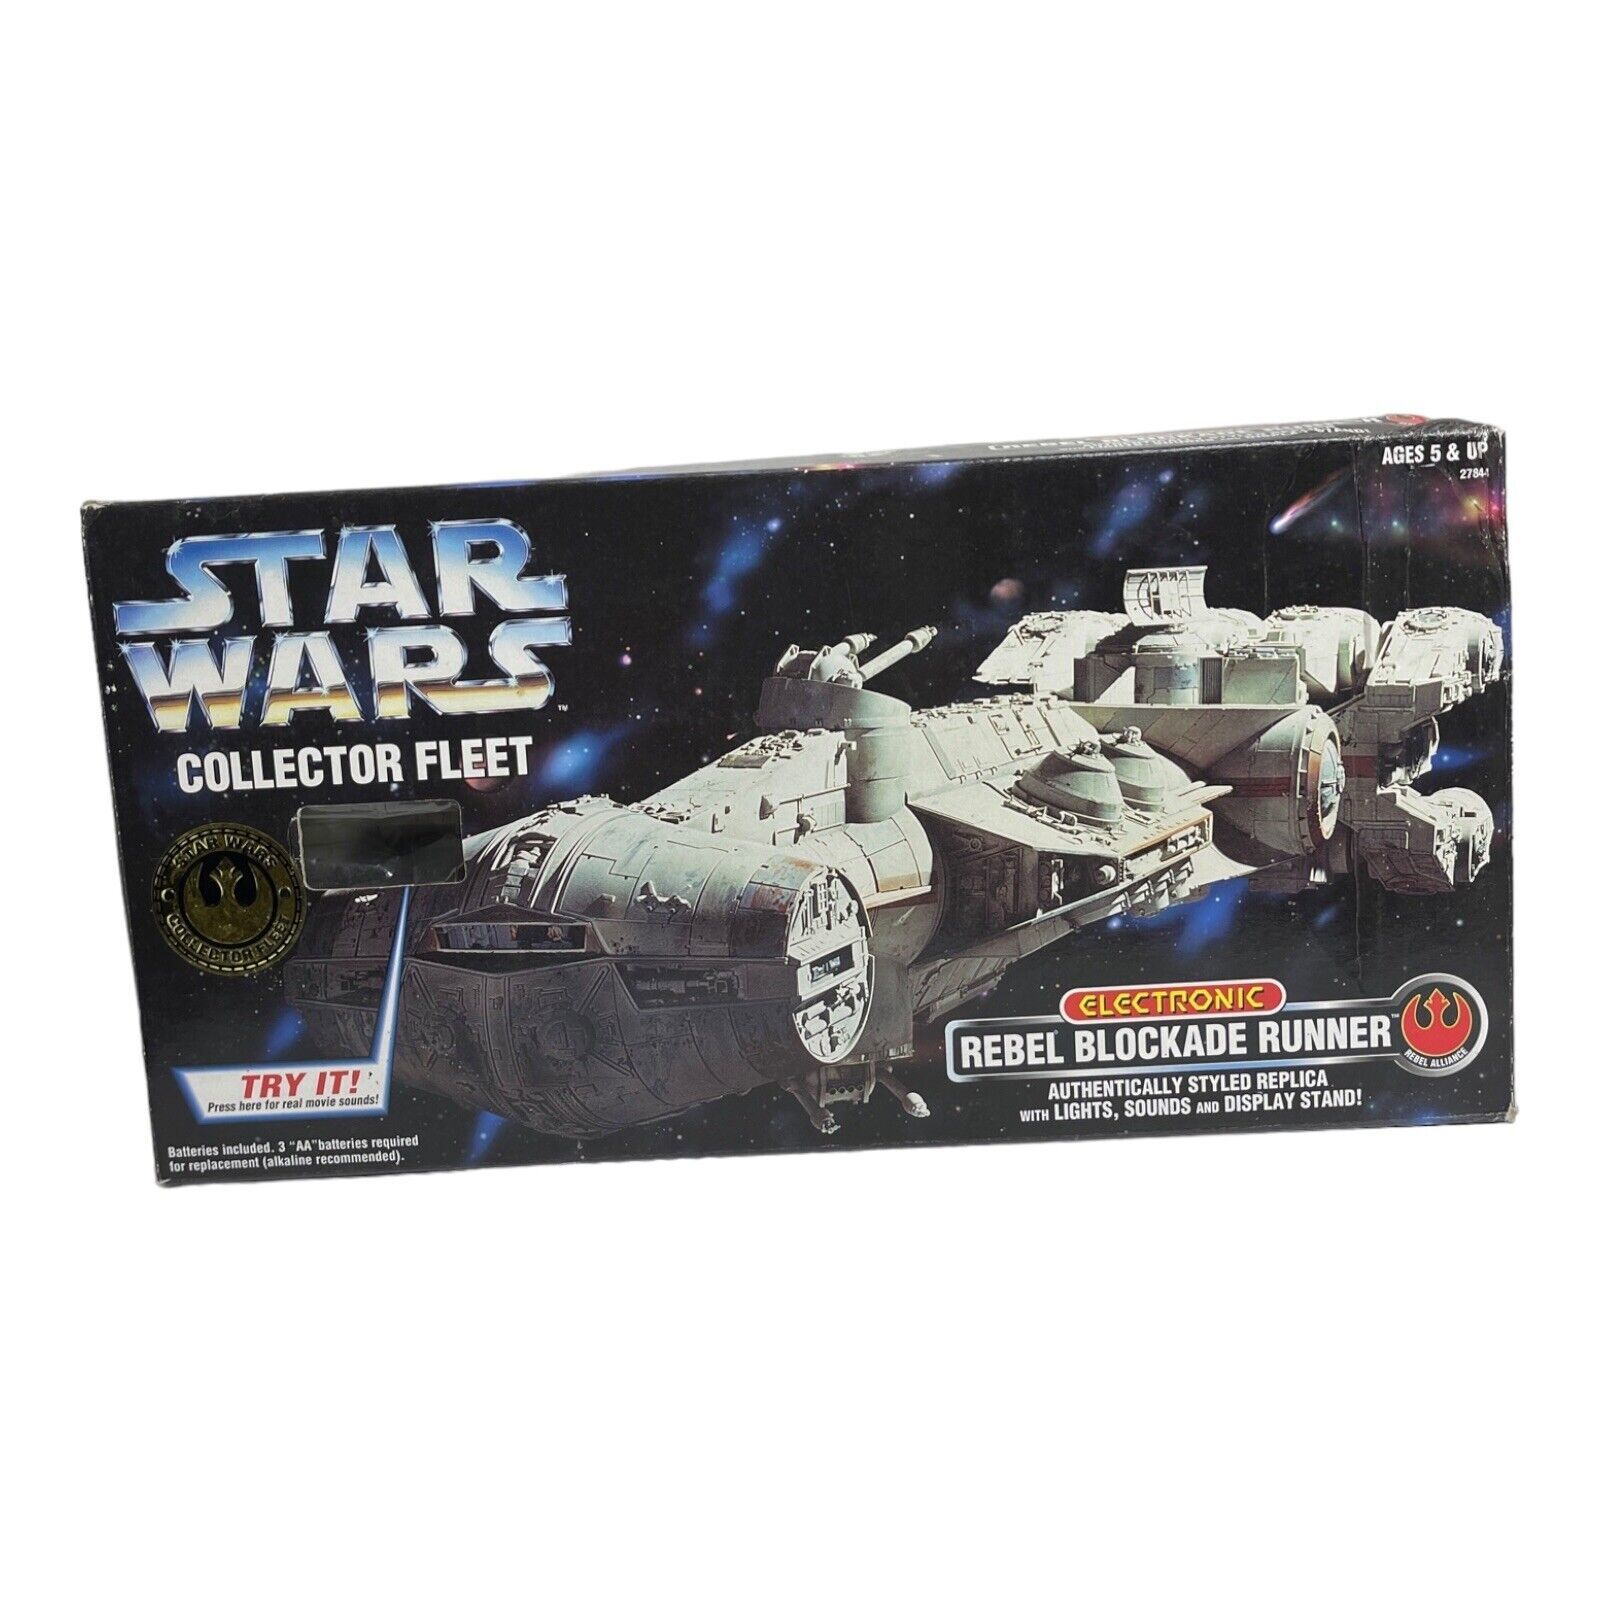 Kenner Star Wars Collector Fleet Electronic Rebel Blockade Runner Ship Figurine - $55.40